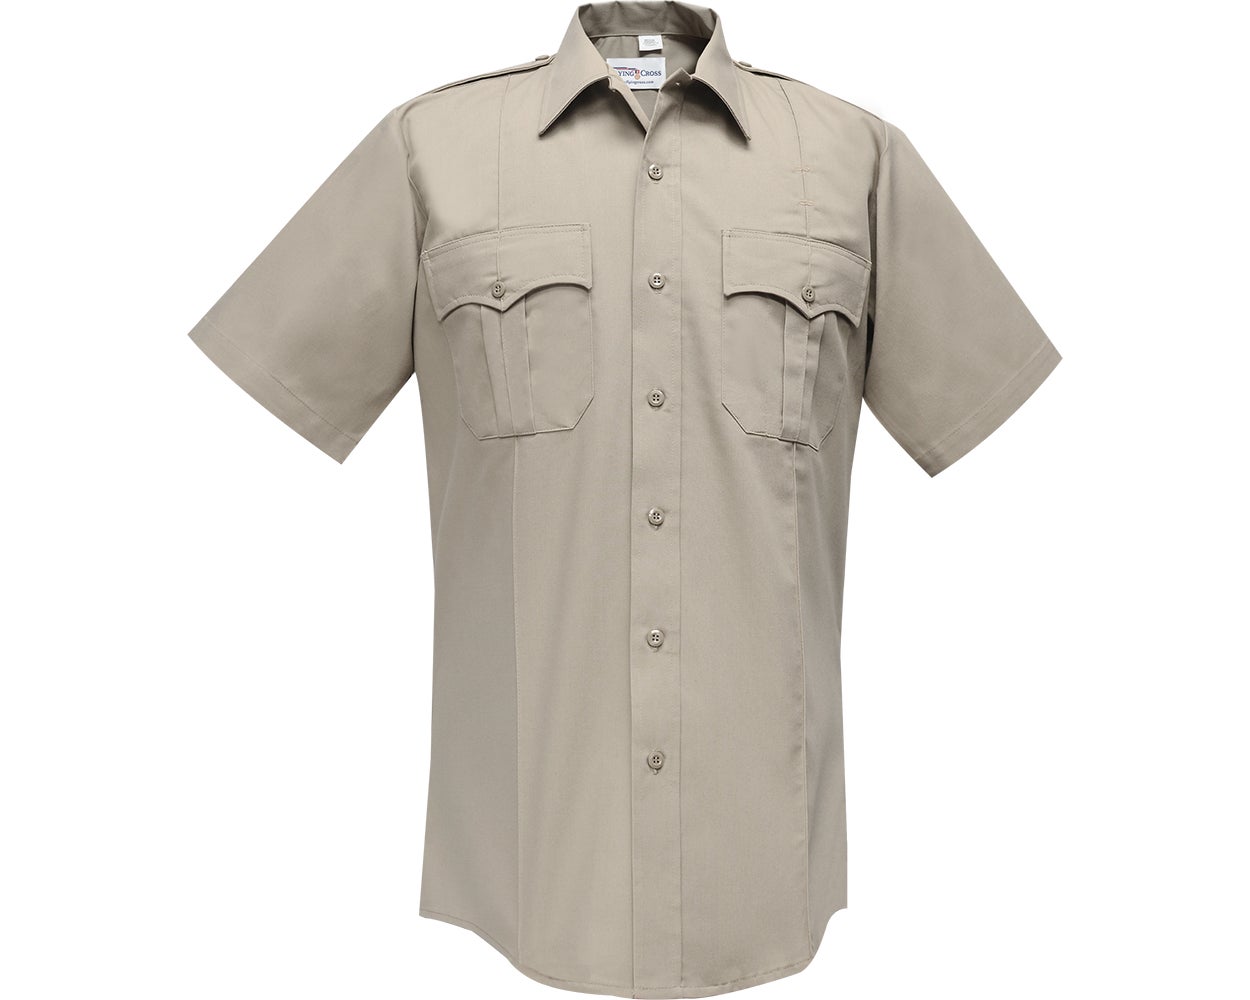 Flying Cross Command 100% Polyester Men's Short Sleeve Uniform Shirt with Zipper 85R77Z/87R78Z - Silver Tan, 21-21.5